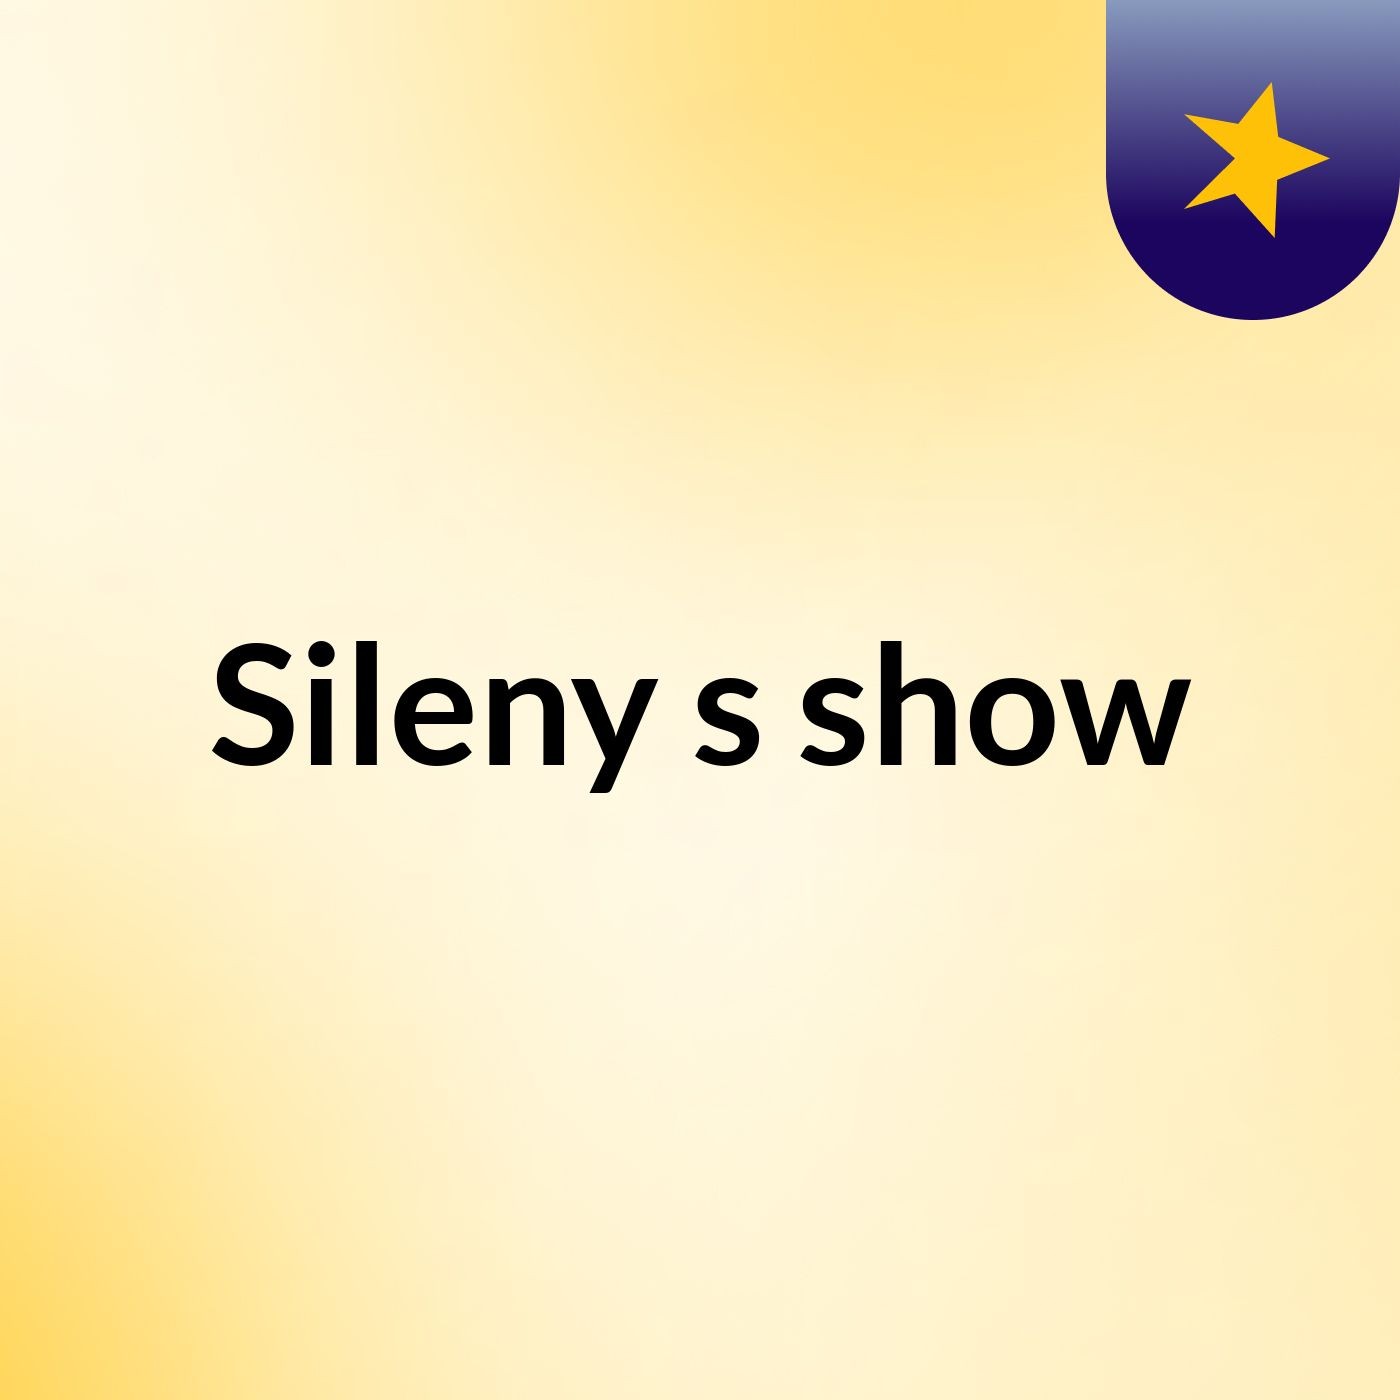 Sileny's show